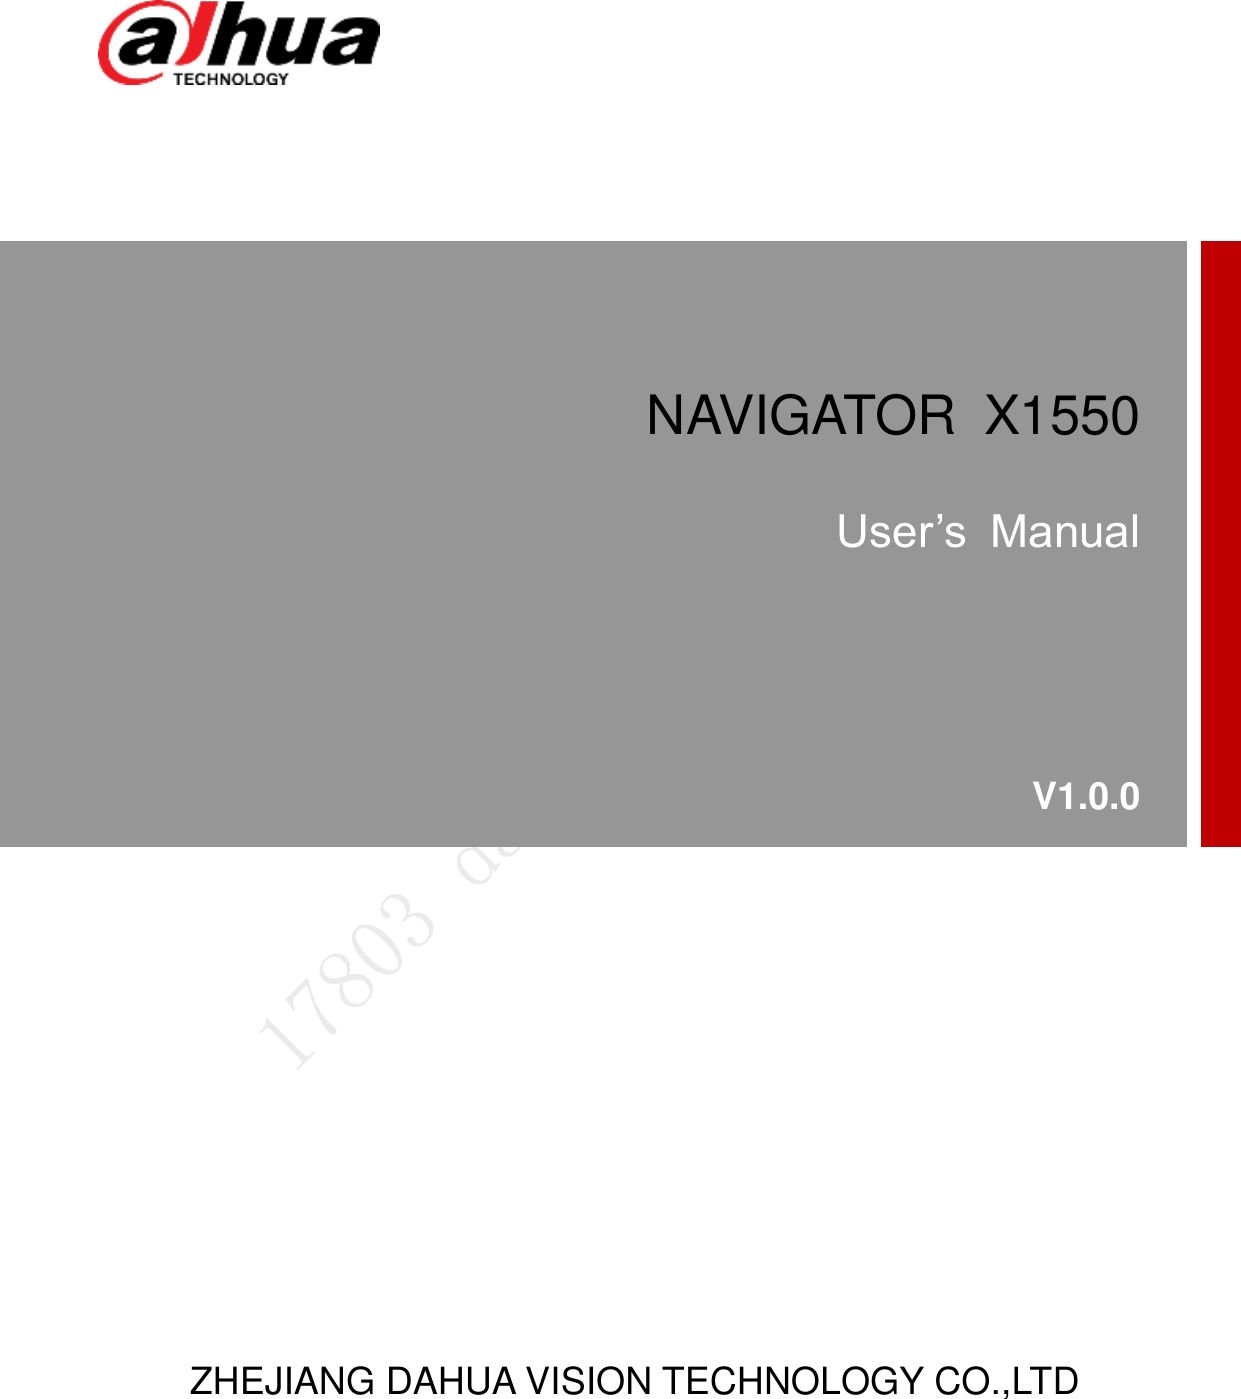         NAVIGATOR  X1550 User’s  Manual V1.0.0 ZHEJIANG DAHUA VISION TECHNOLOGY CO.,LTD  